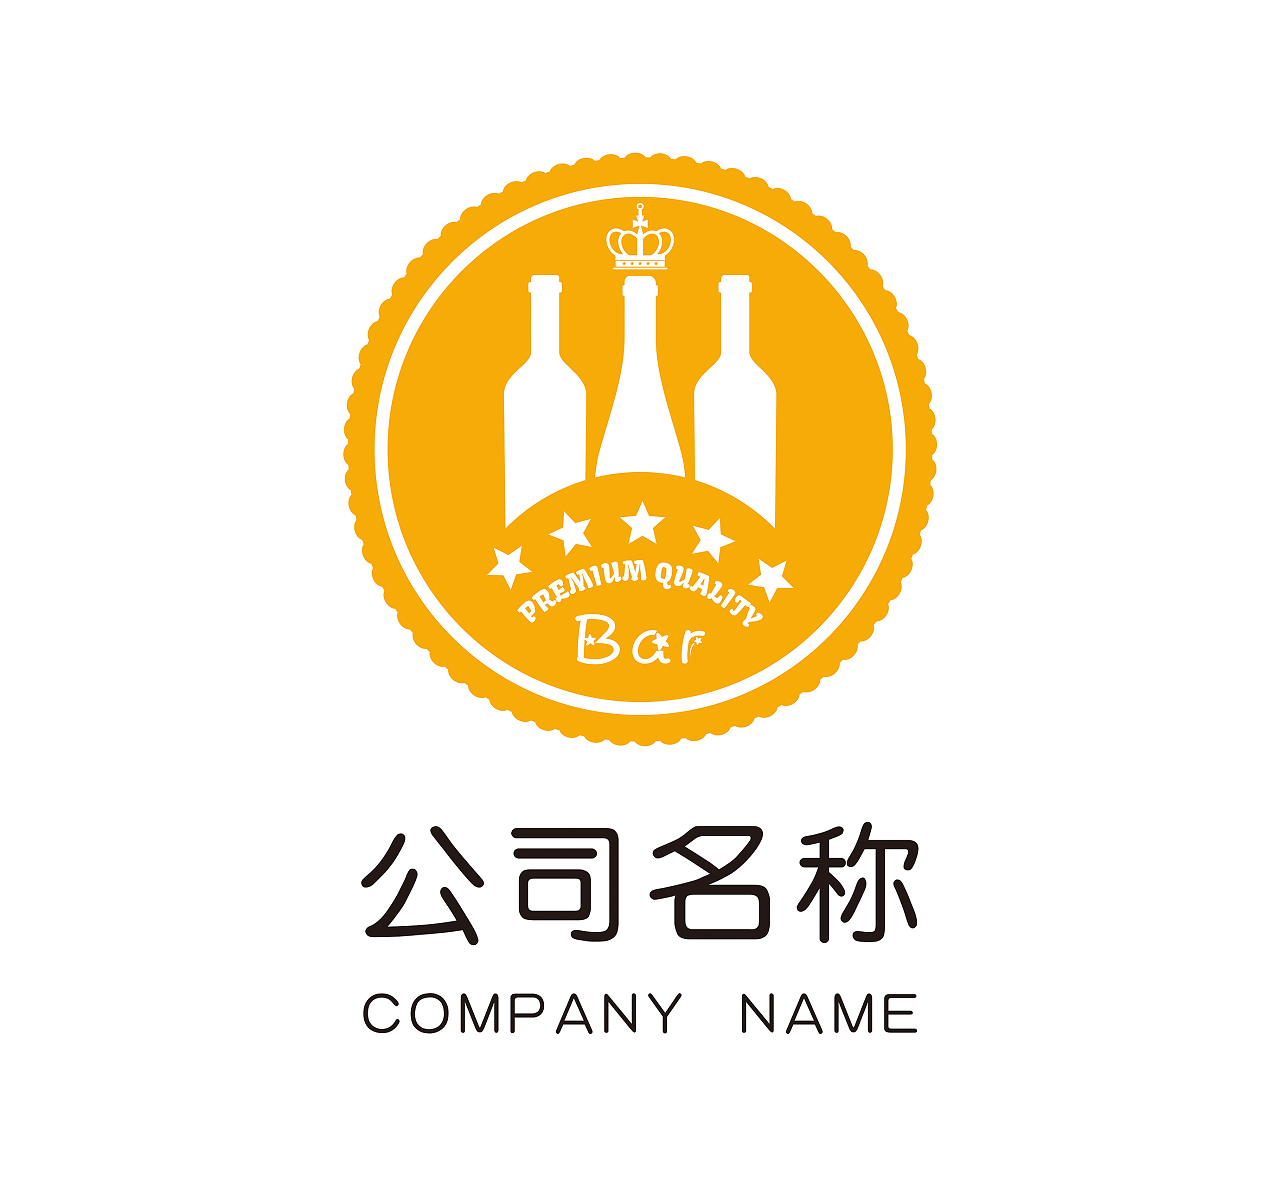 酒logo葡萄酒logo圆形logo皇冠logo